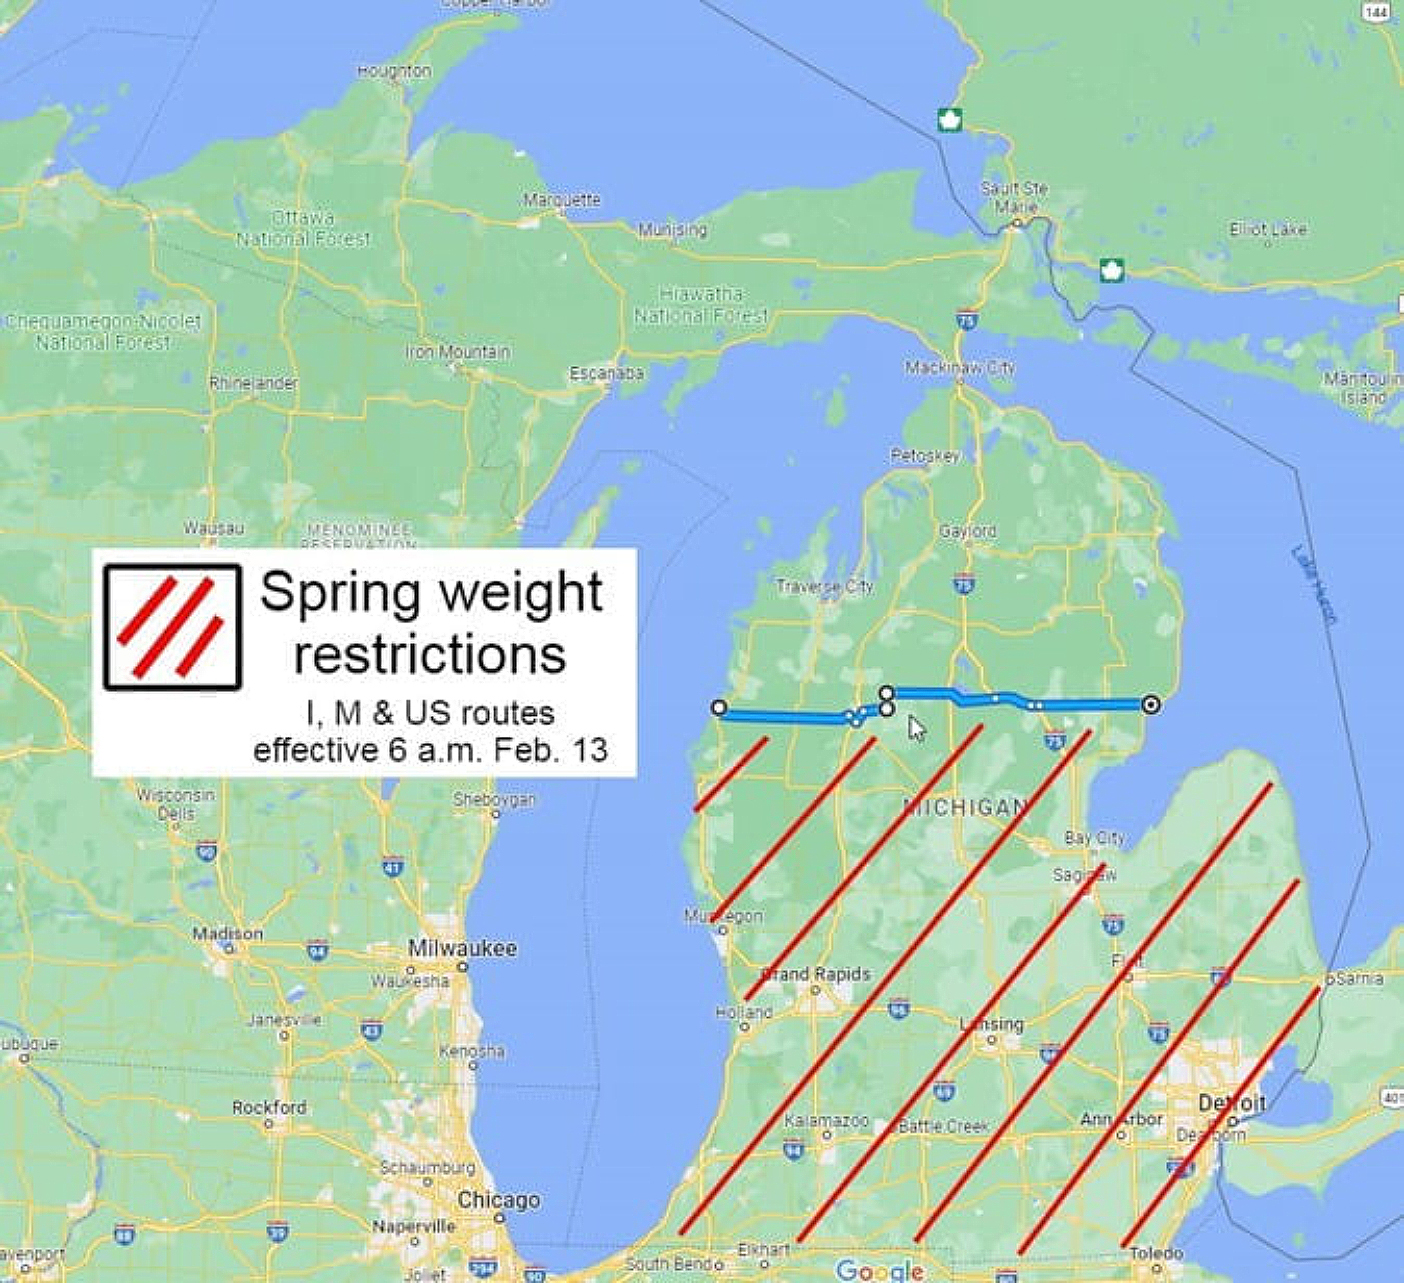 Michigan seasonal weight restrictions start